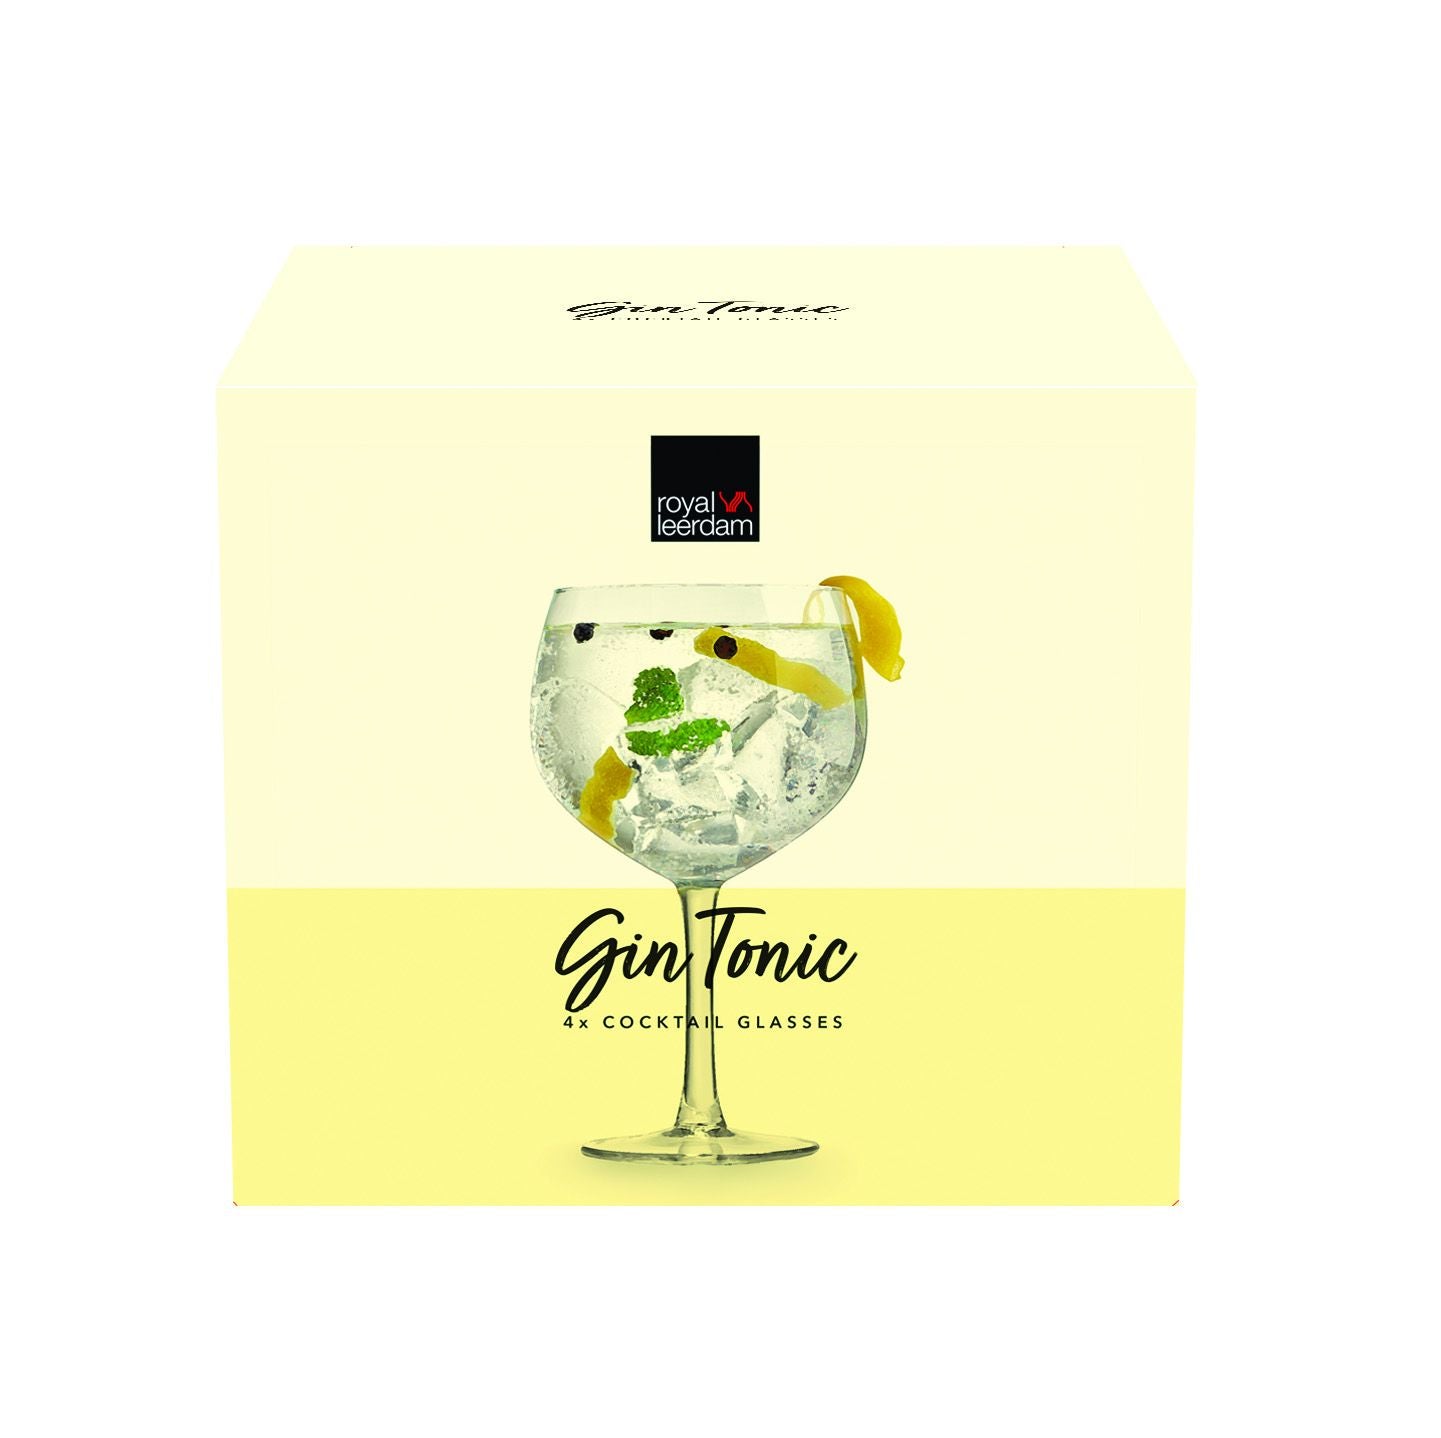 Royal Leerdam Gin & Tonic Cocktail Glasses x 4